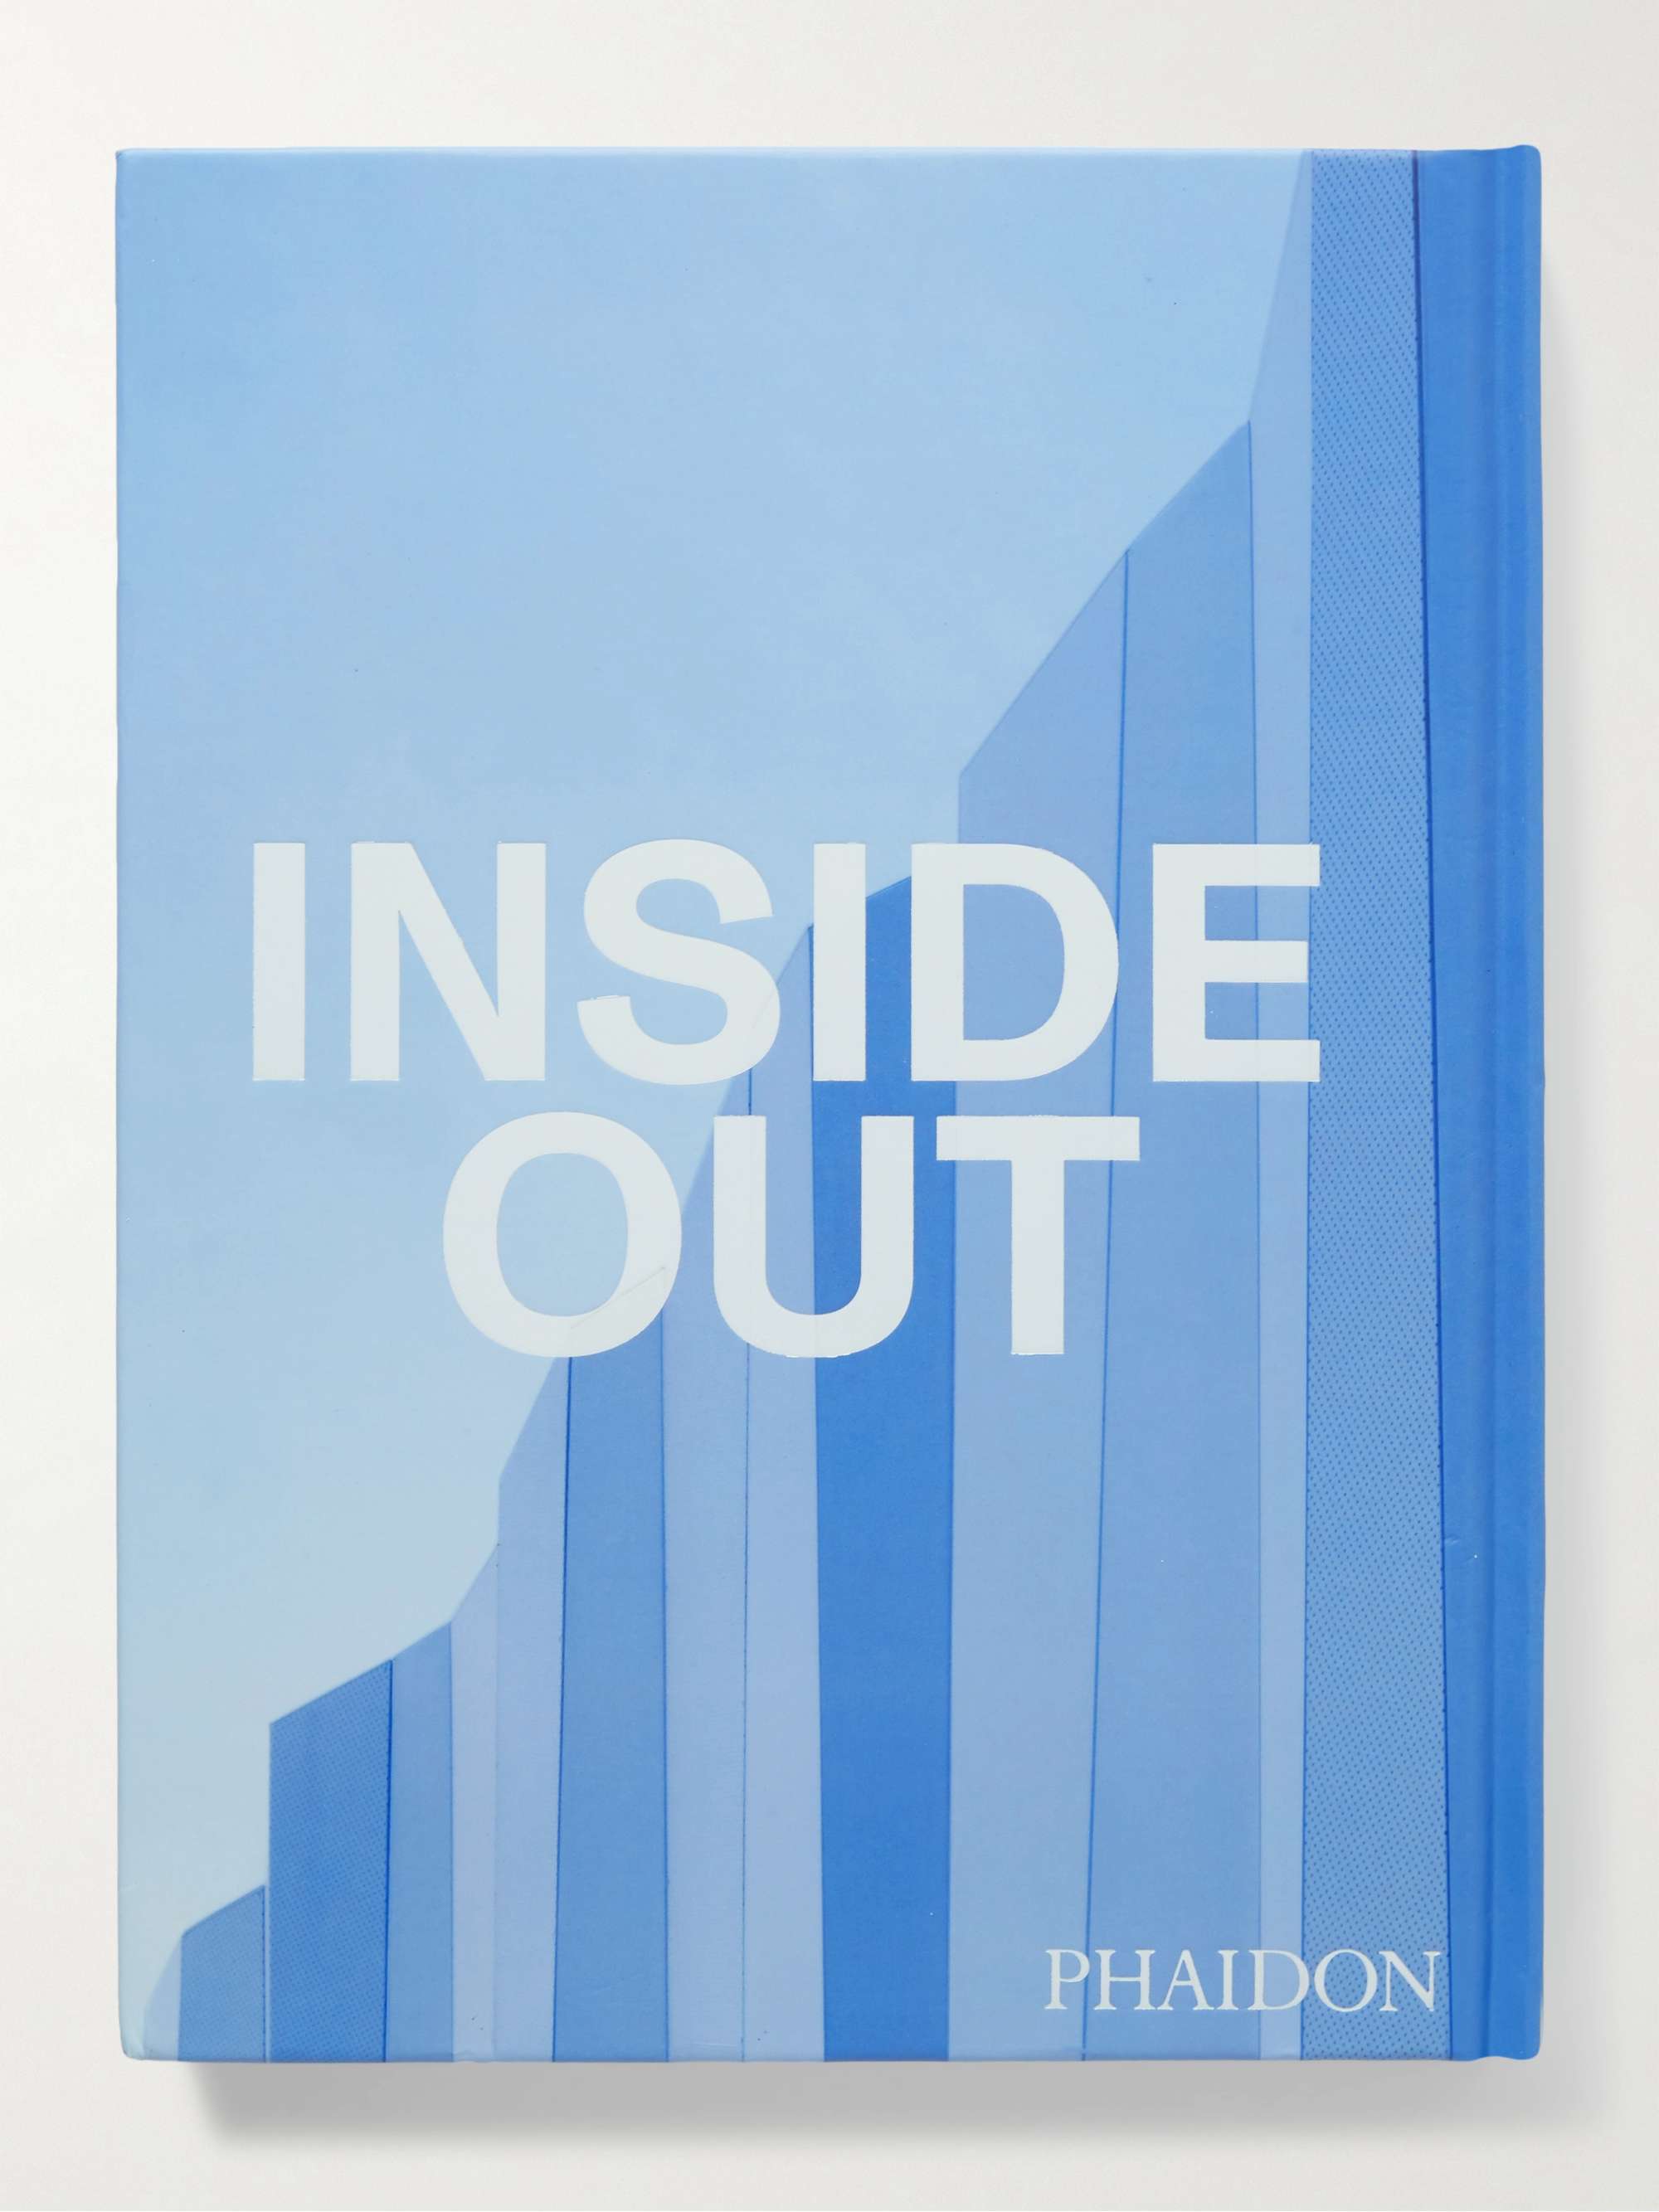 PHAIDON Universal Design Studio: Inside Out Hardcover Book